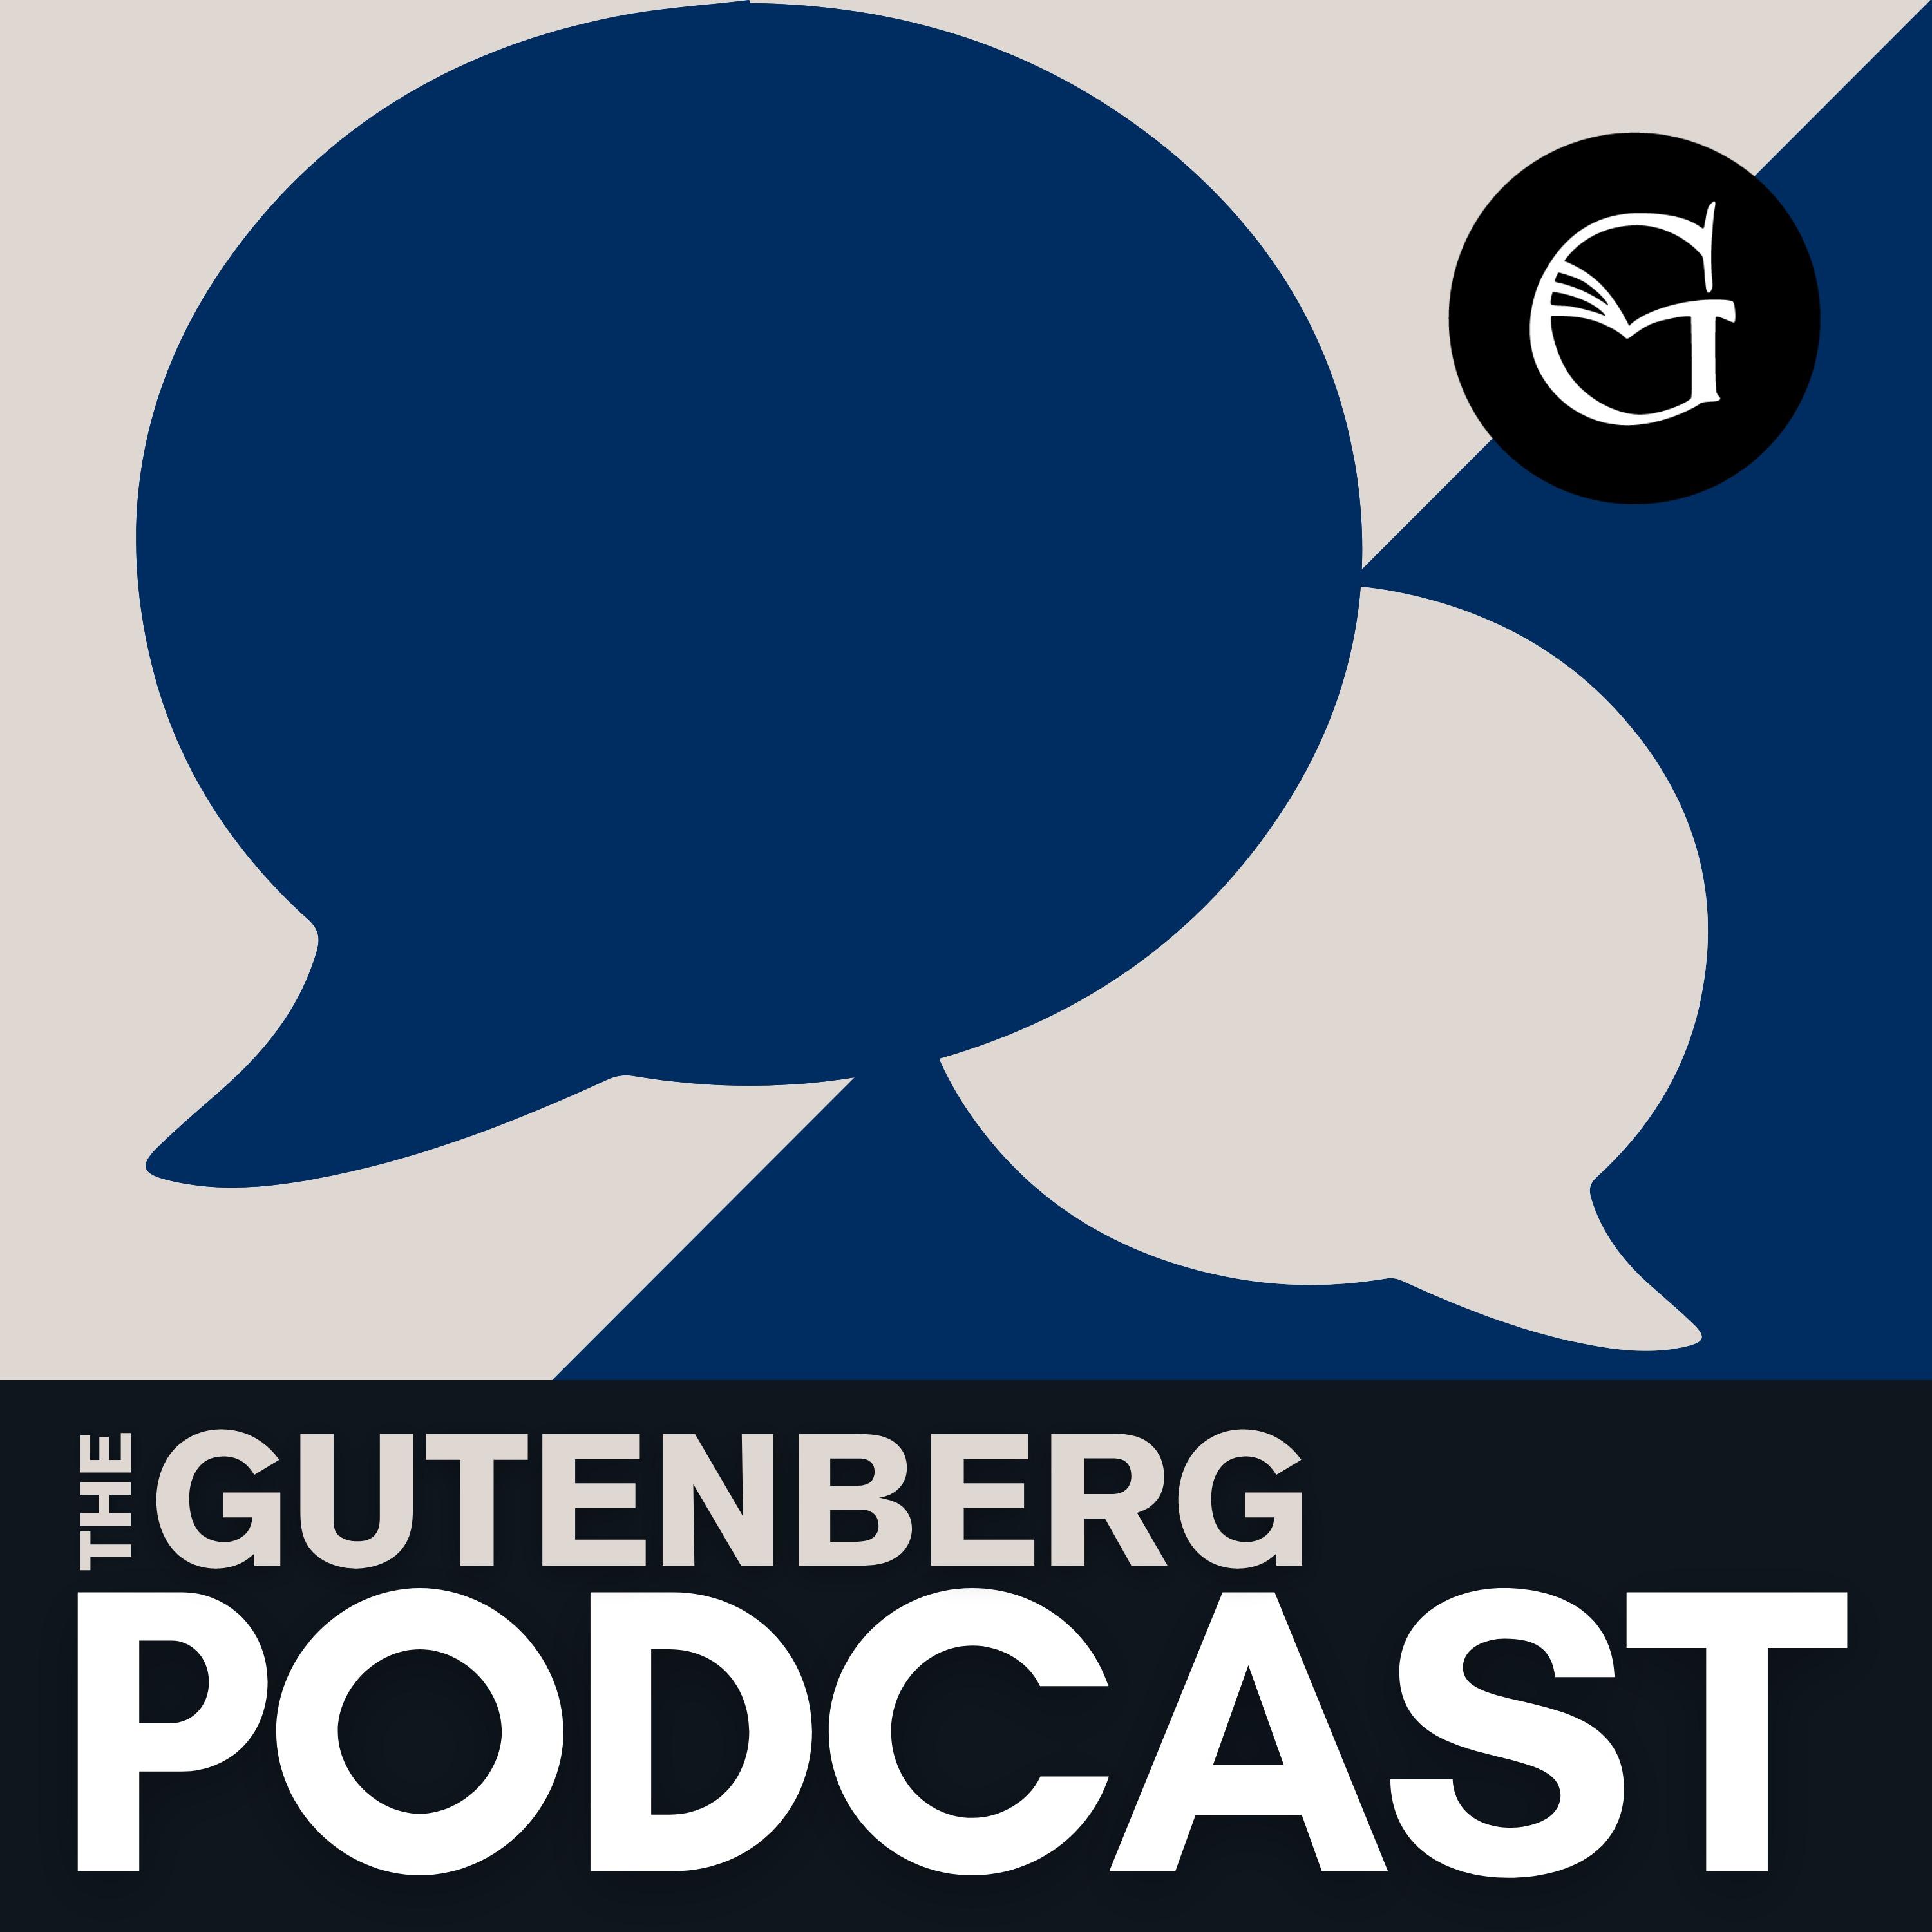 The Gutenberg Podcast